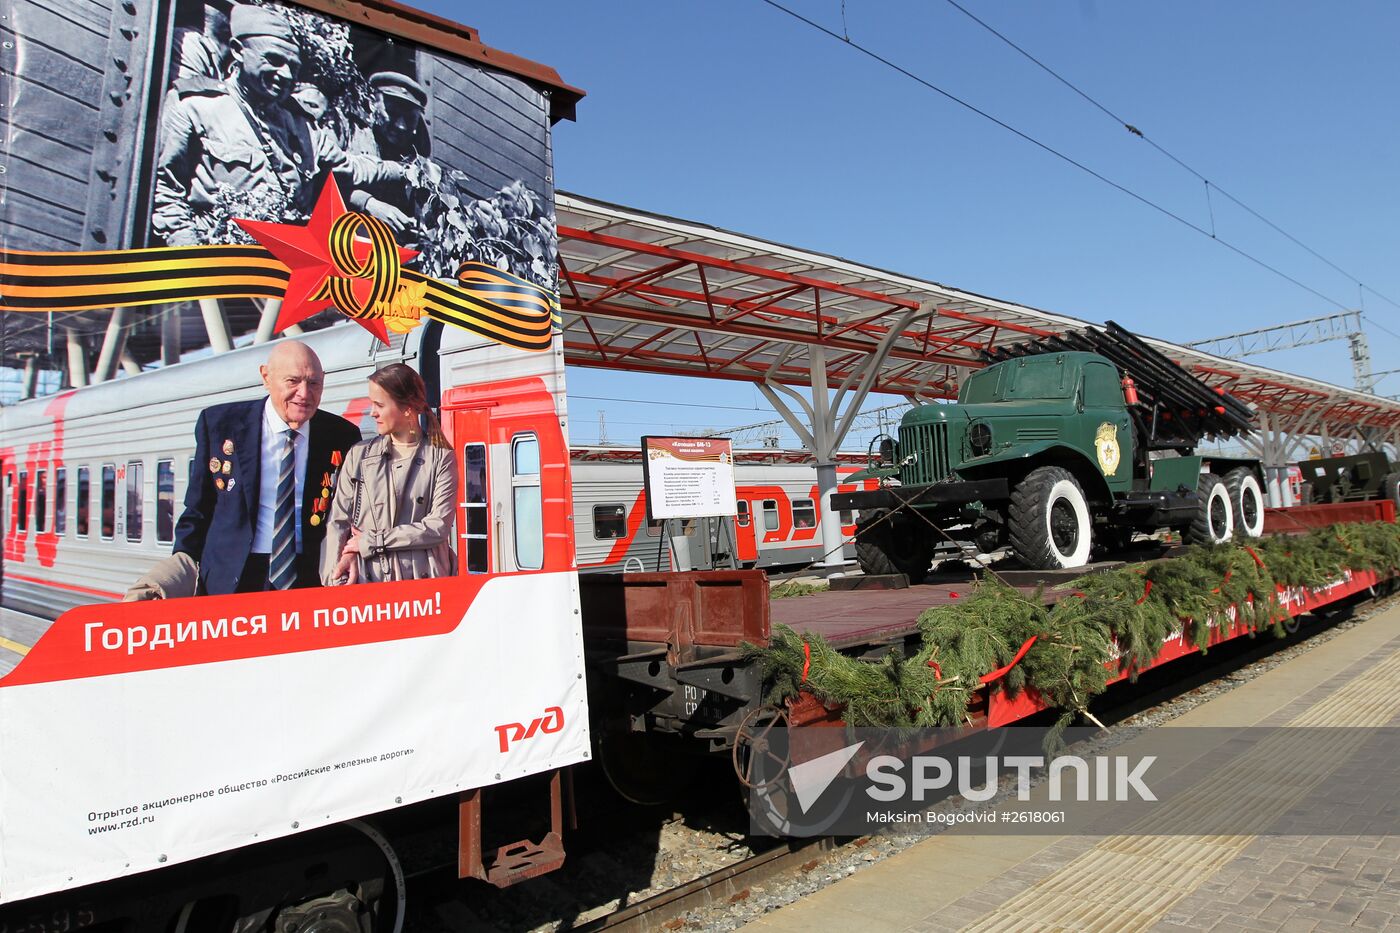 Train of Victory arrives in Kazan